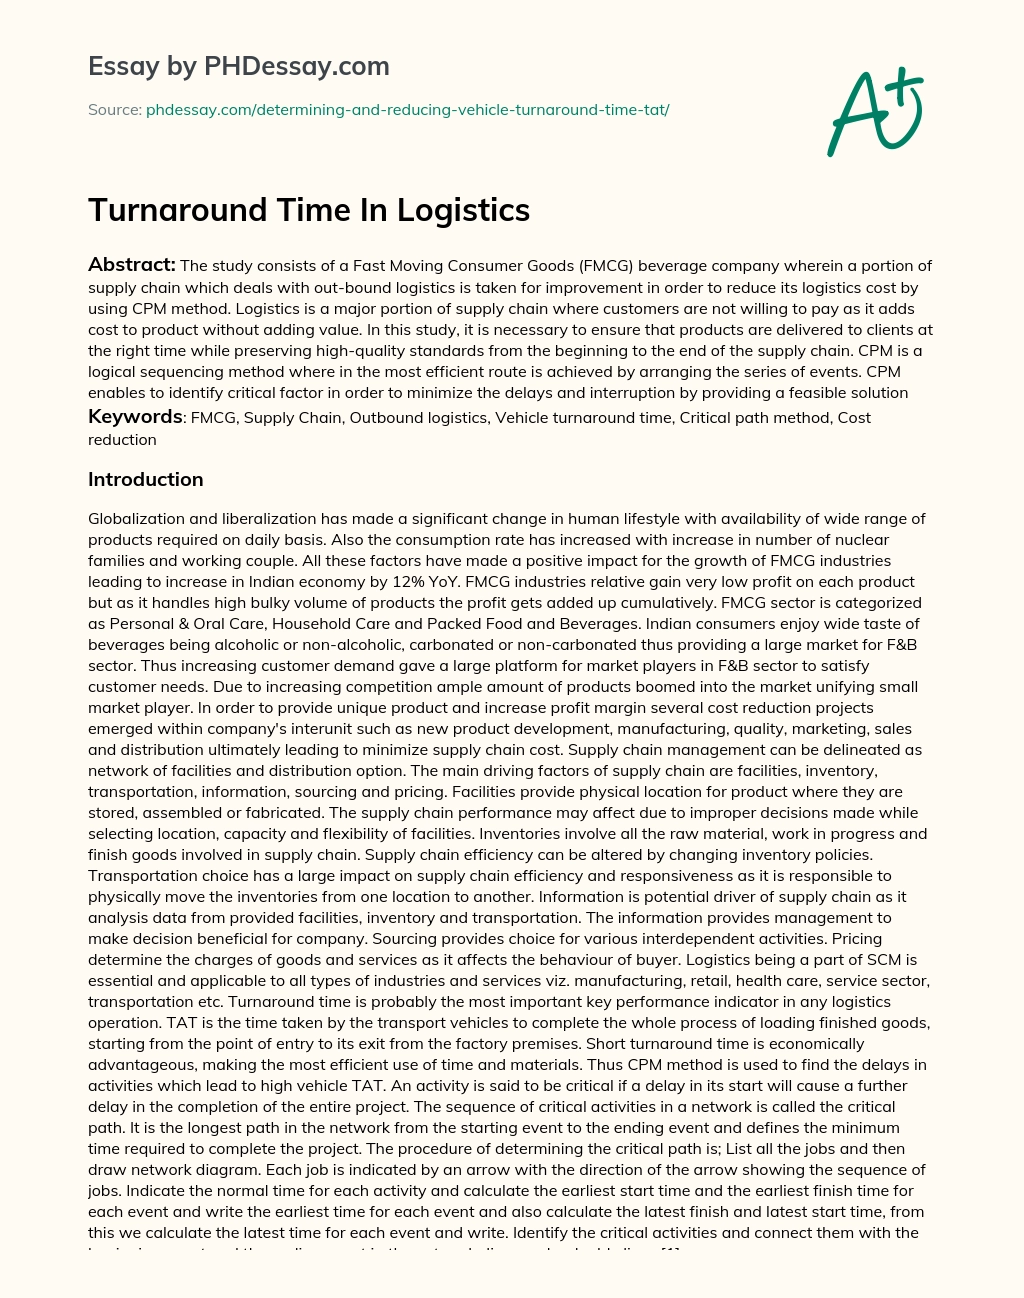 Turnaround Time In Logistics essay